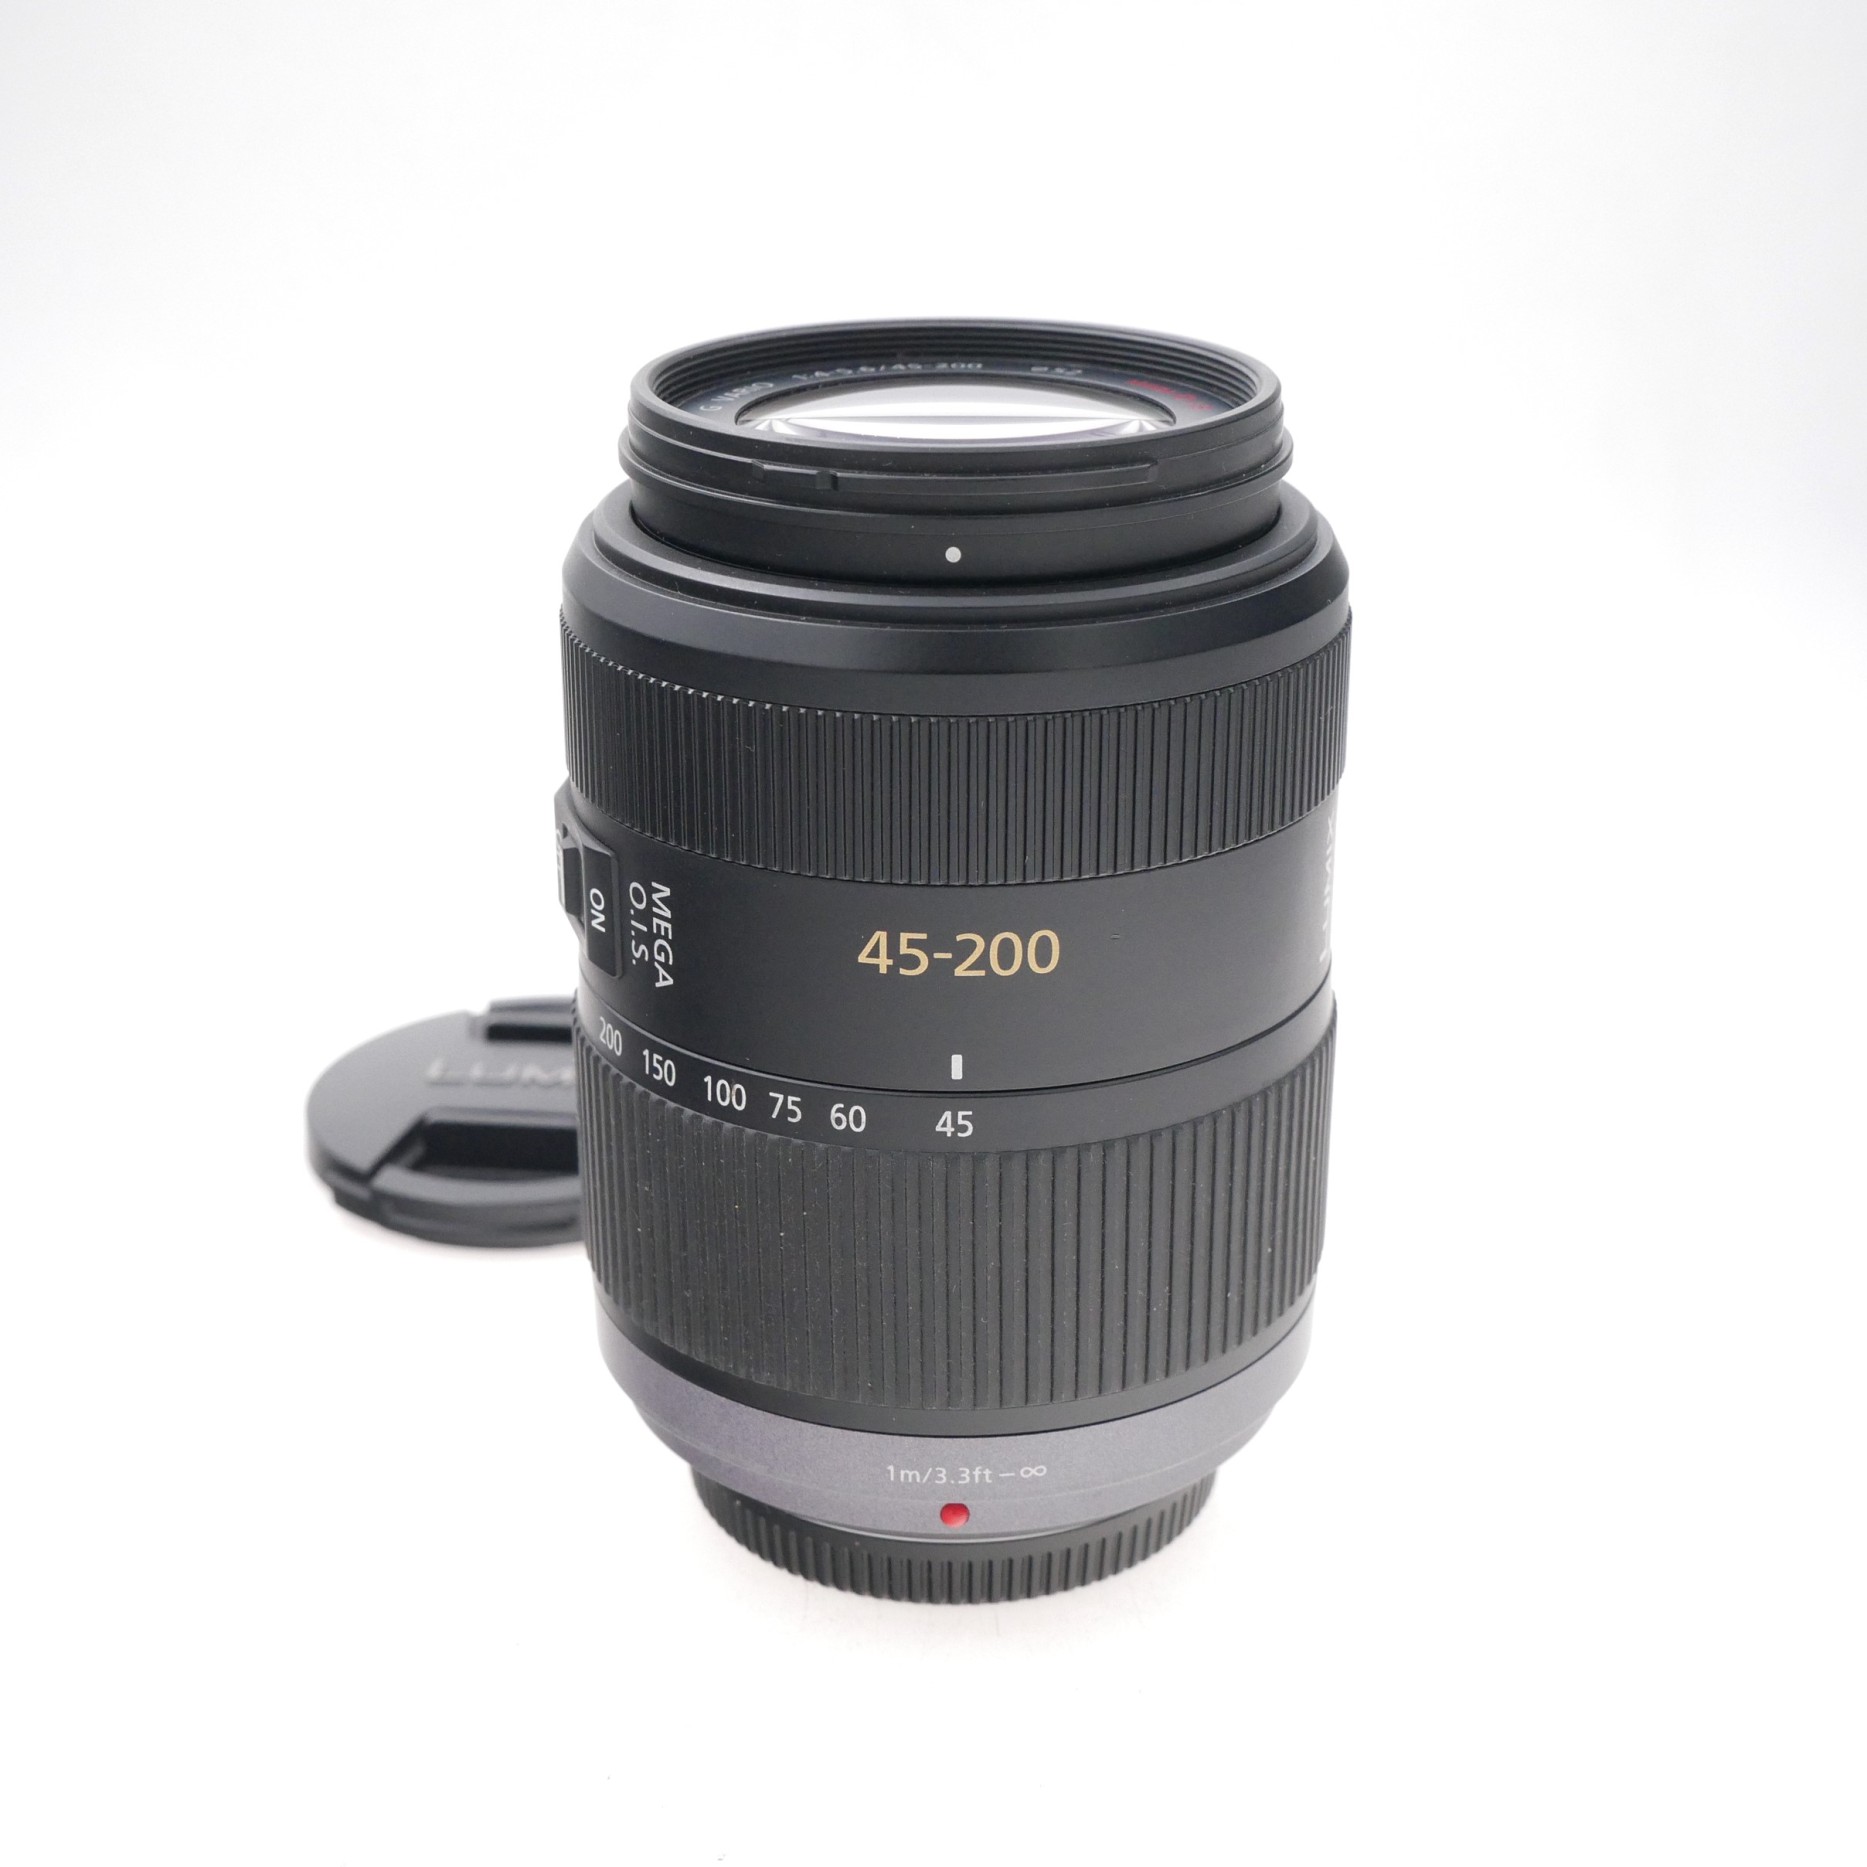 Panasonic AF 45-200mm f/4-5.6 G Vario Lens for Micro 4/3